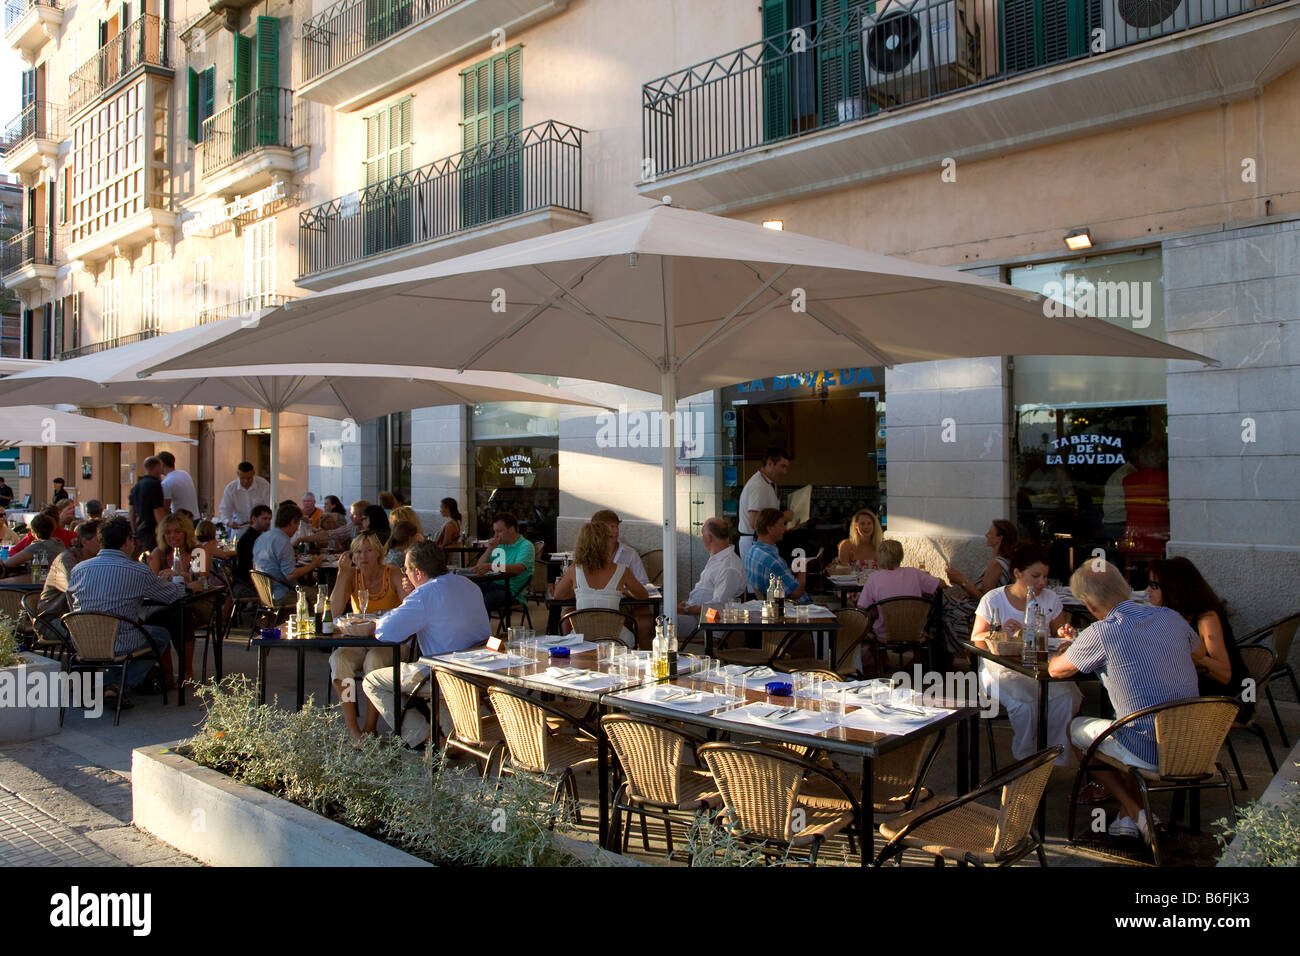 La Taberna de Boveda, restaurant et bar, terrasse, Palma de Mallorca, Majorque, Îles Baléares, Espagne, Europe Banque D'Images